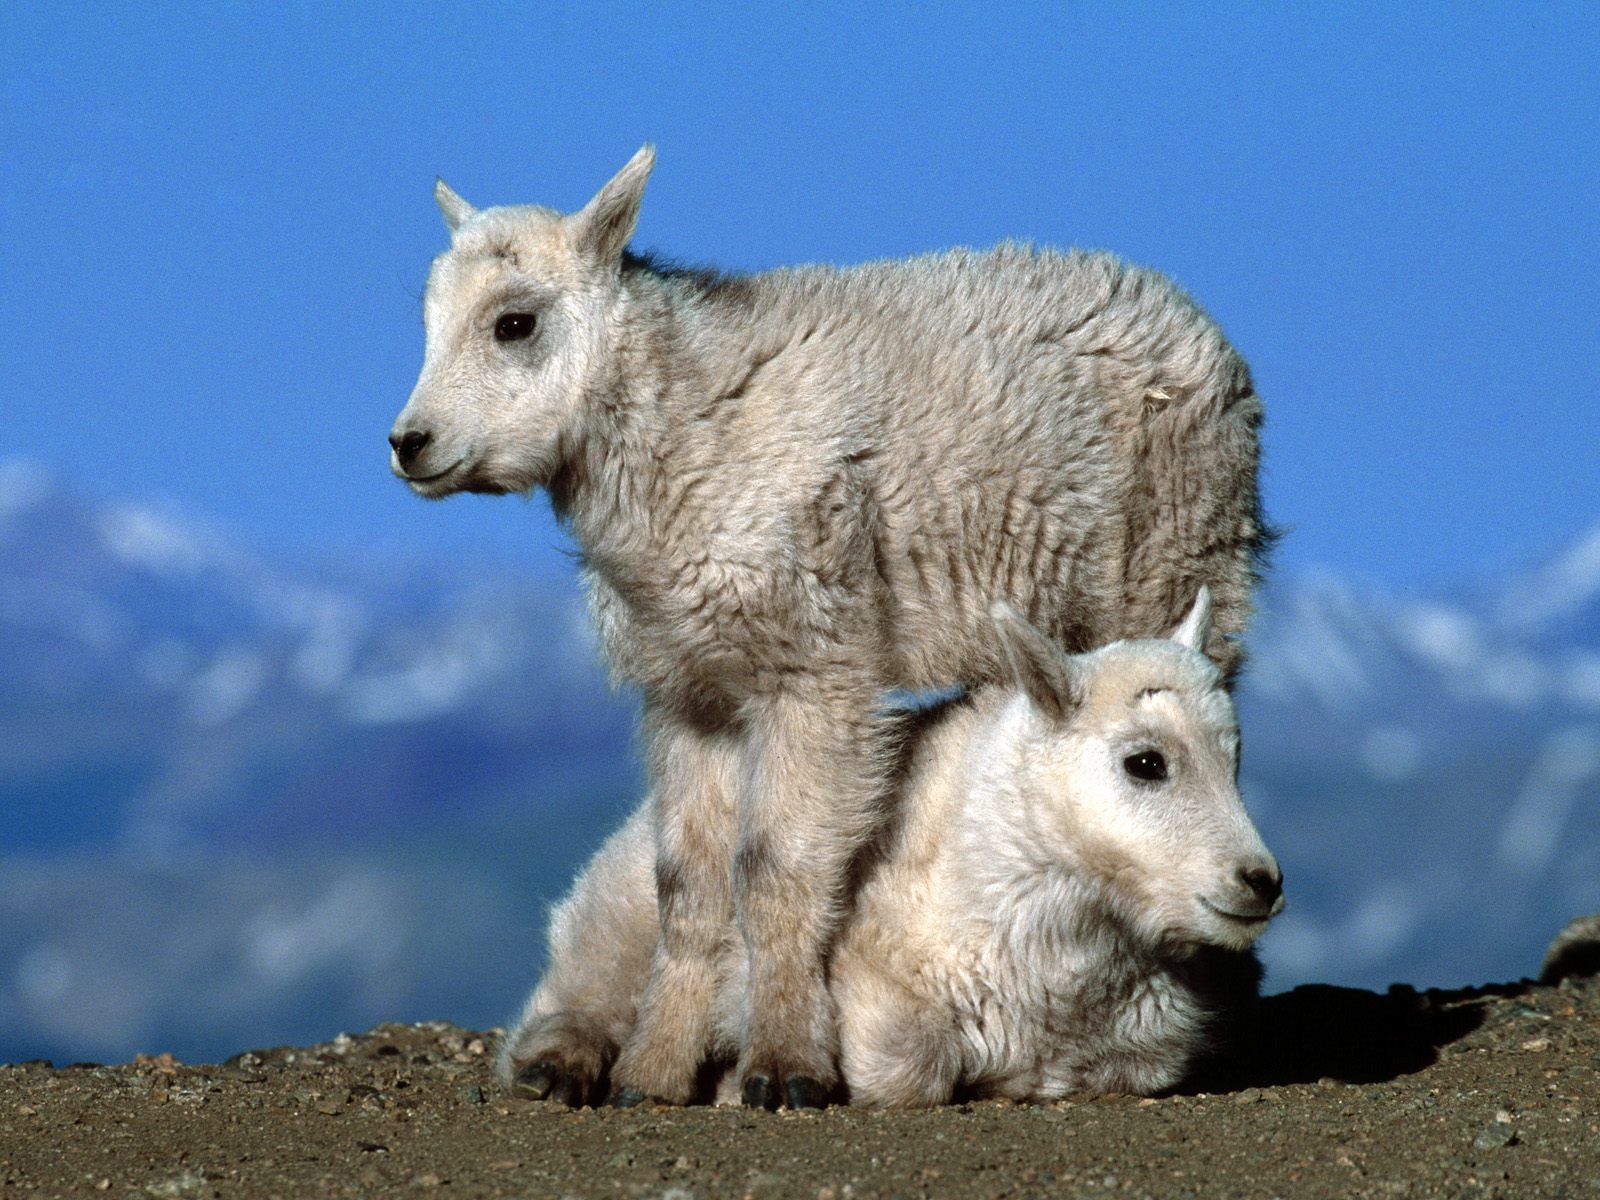 Two baby goats desktop PC and Mac wallpaper